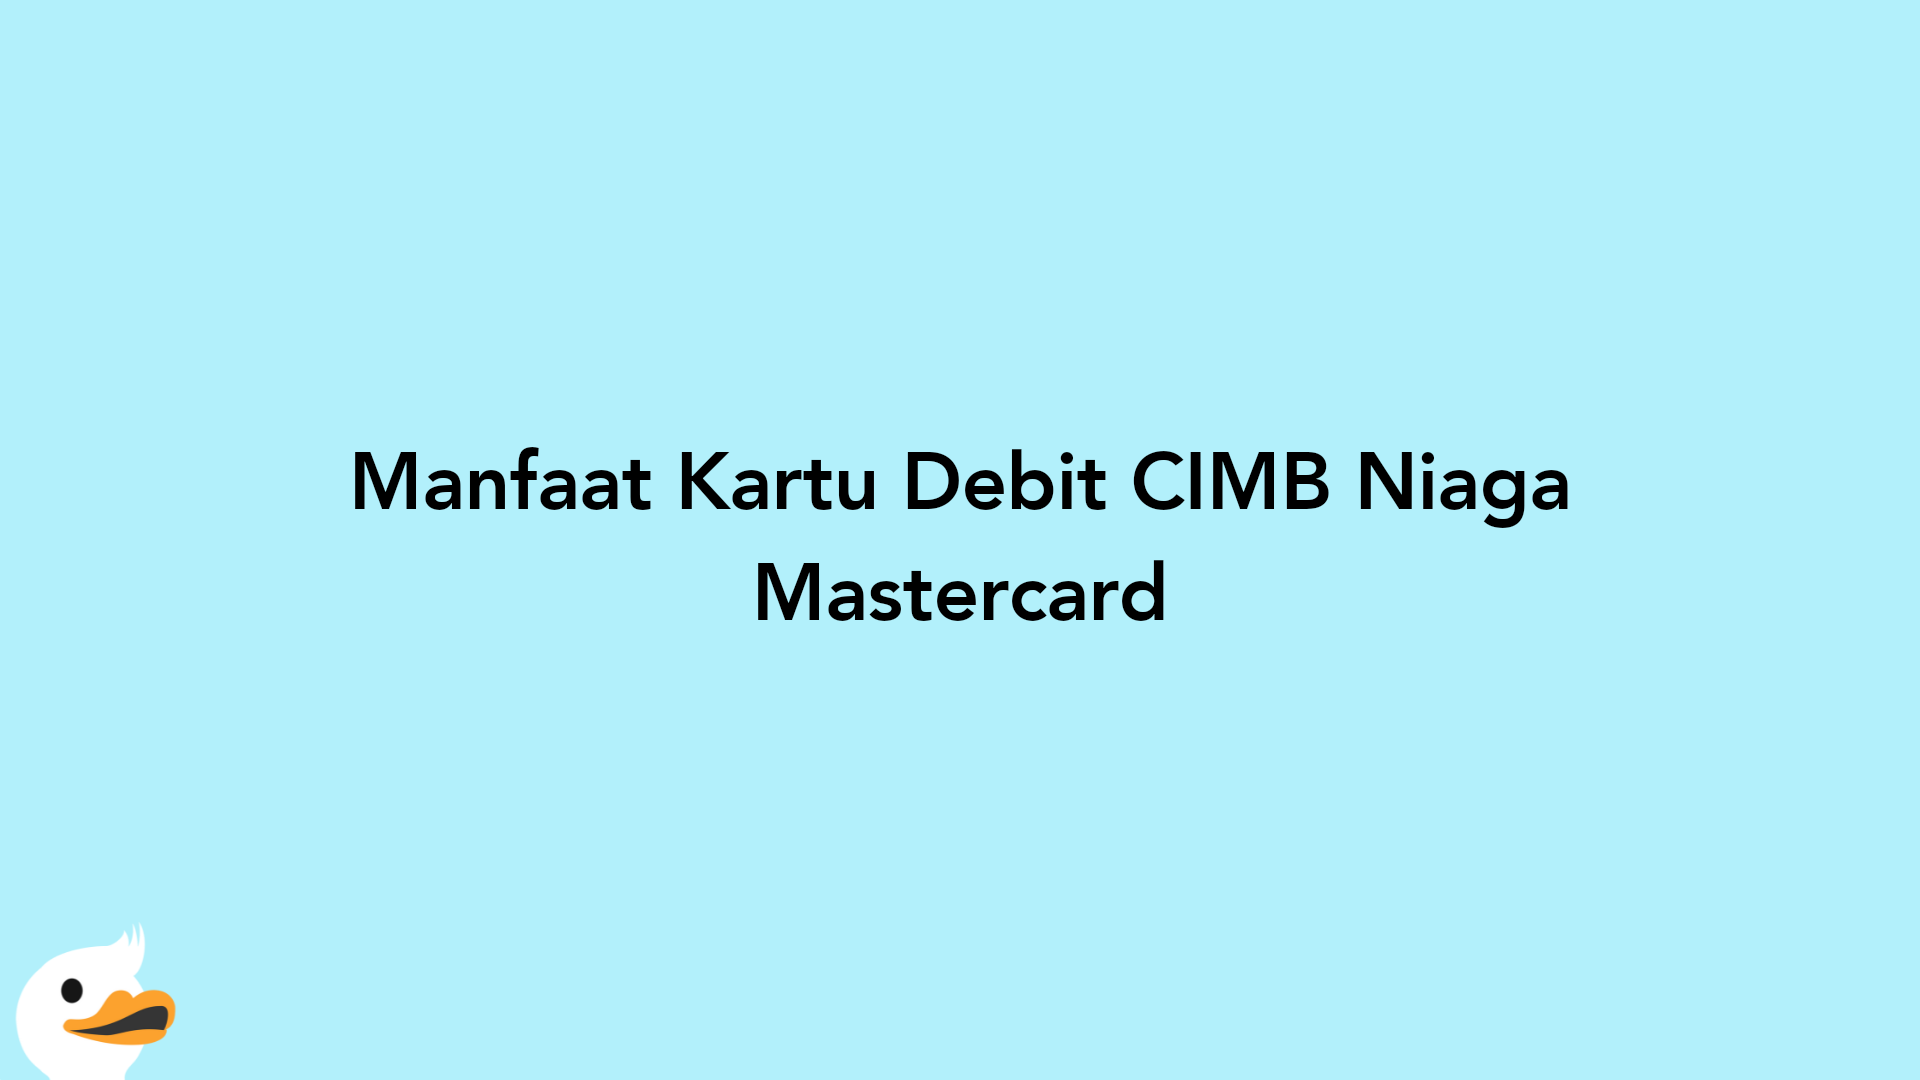 Manfaat Kartu Debit CIMB Niaga Mastercard